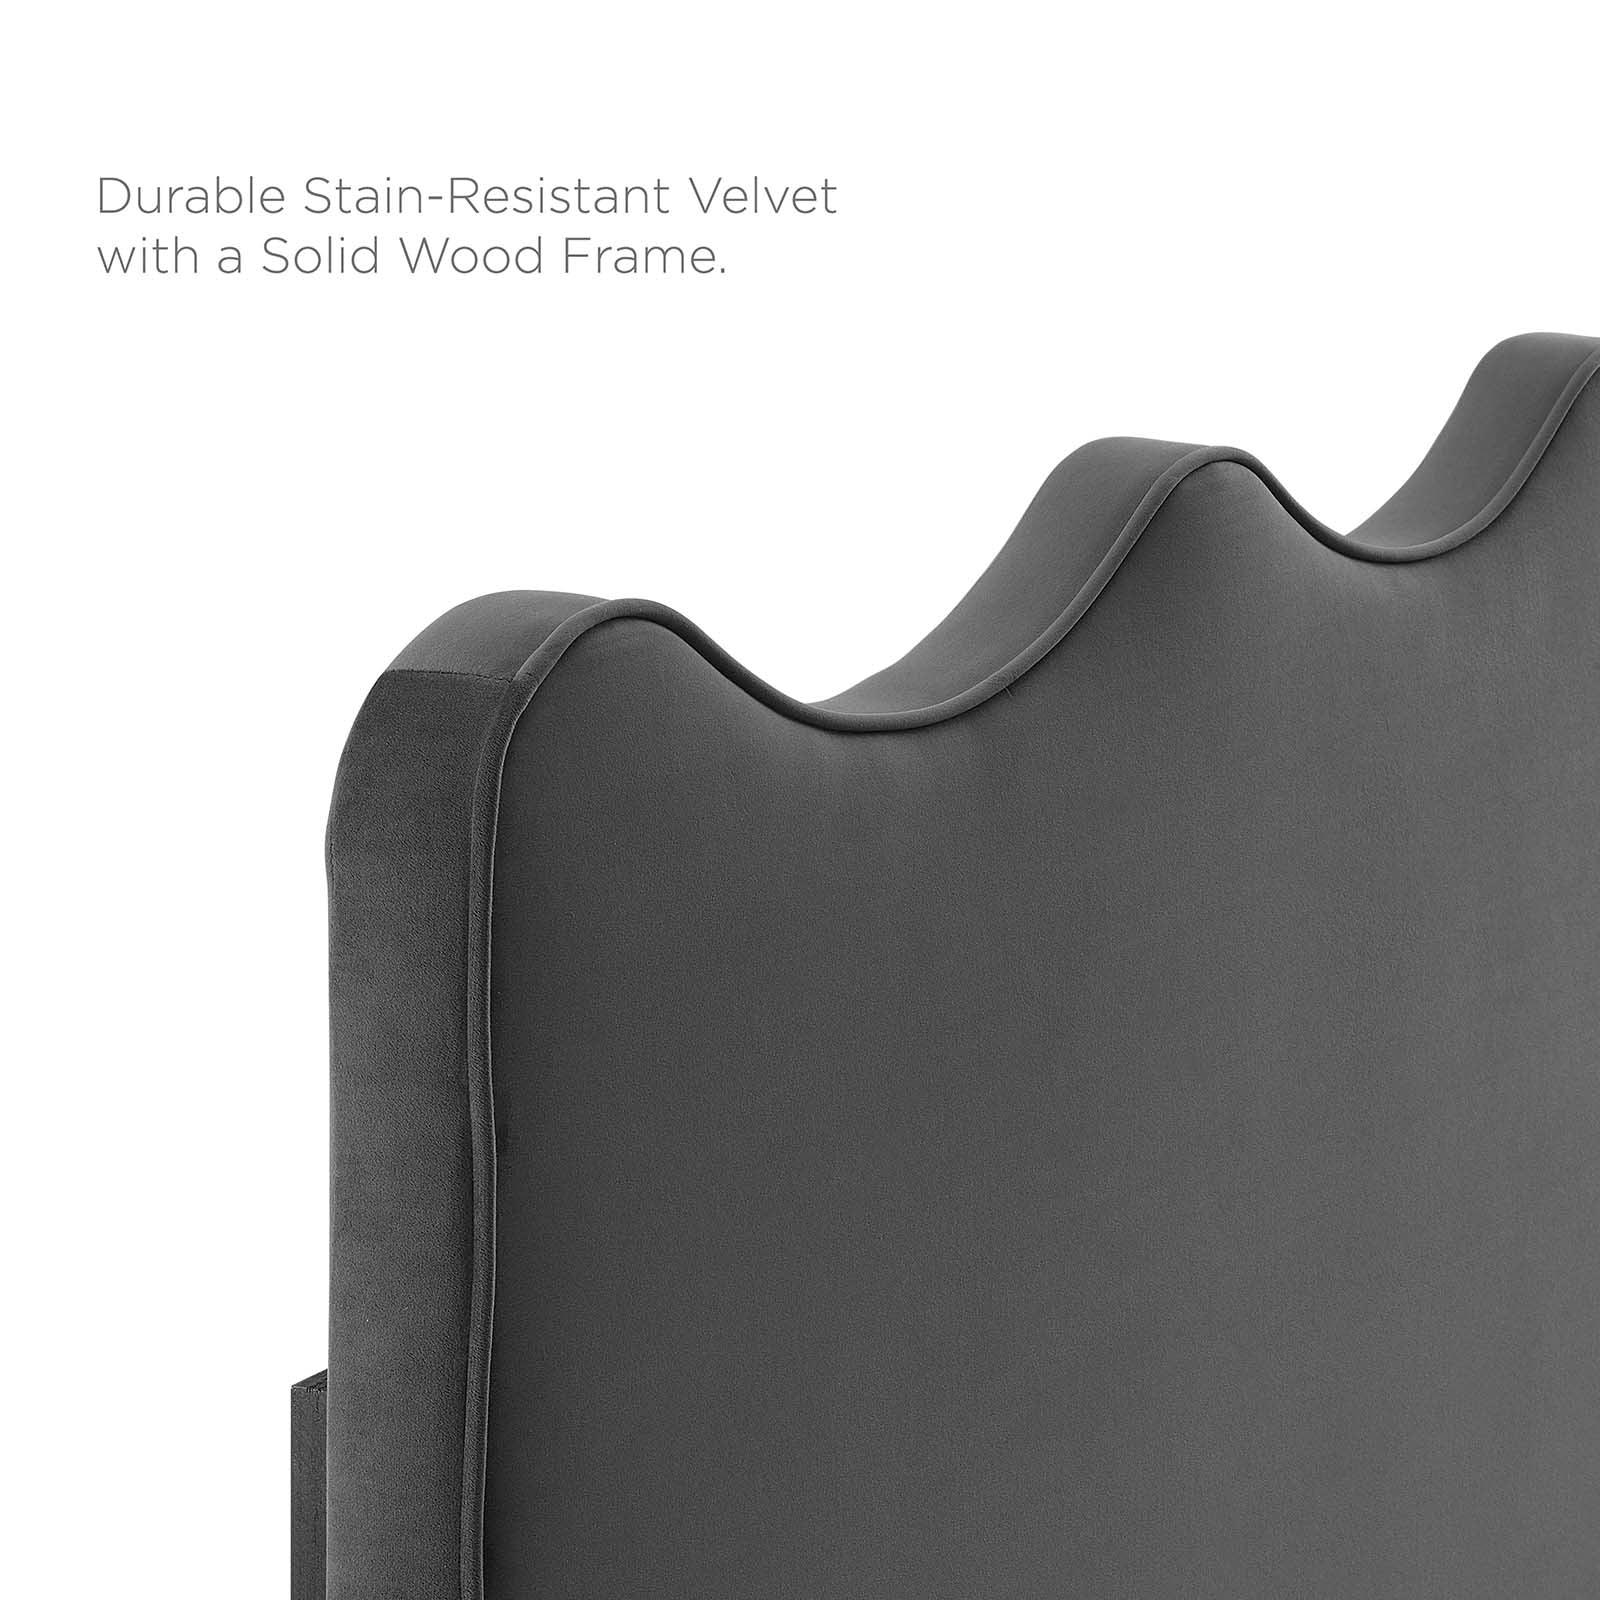 Current Performance Velvet Platform Bed With Gold Metal Sleeves - East Shore Modern Home Furnishings